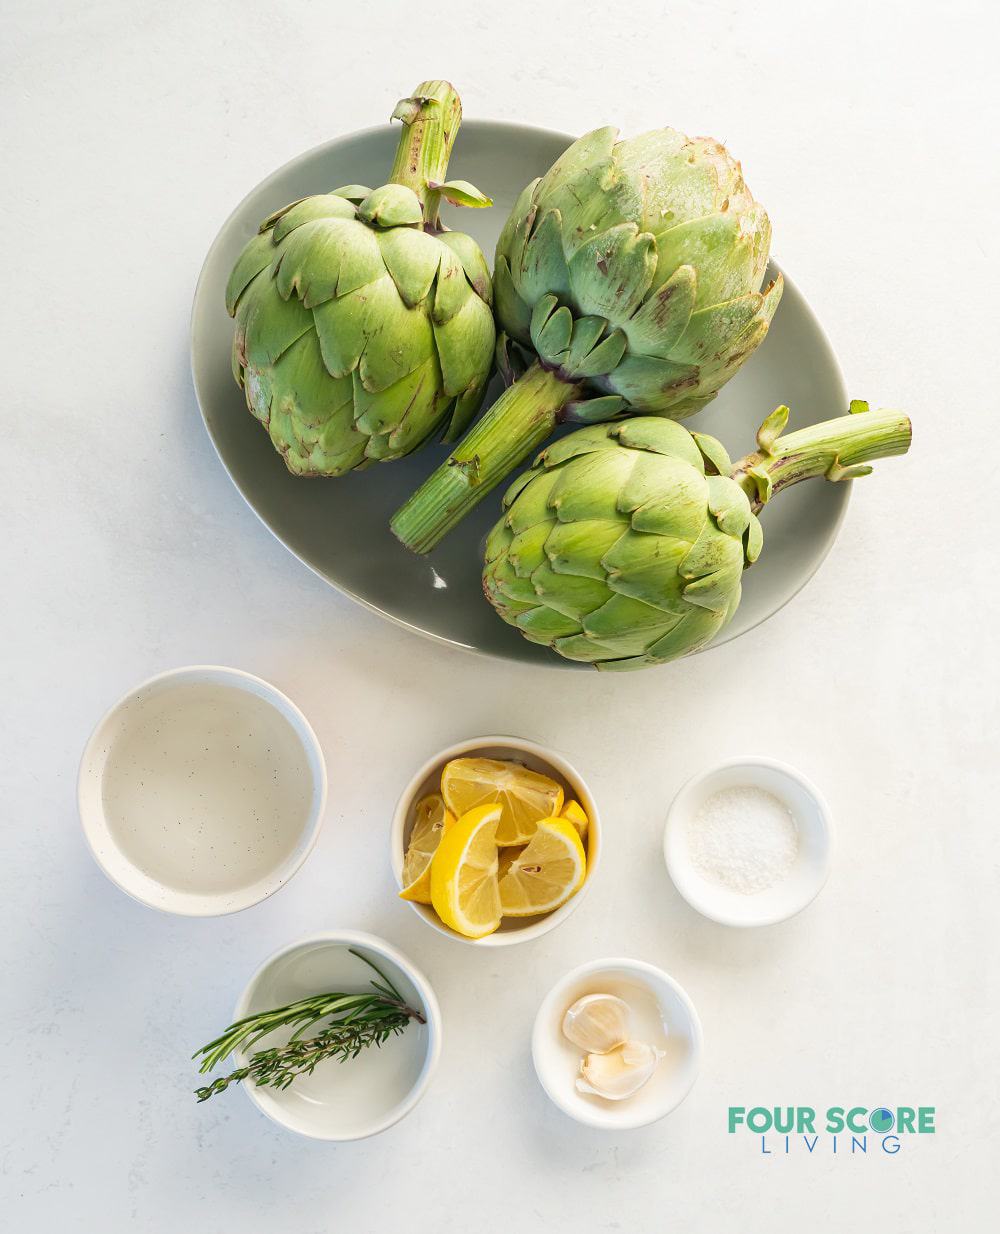 The ingredients needed to make instant pot artichokes, including three artichokes, lemon, garlic, and seasonings.